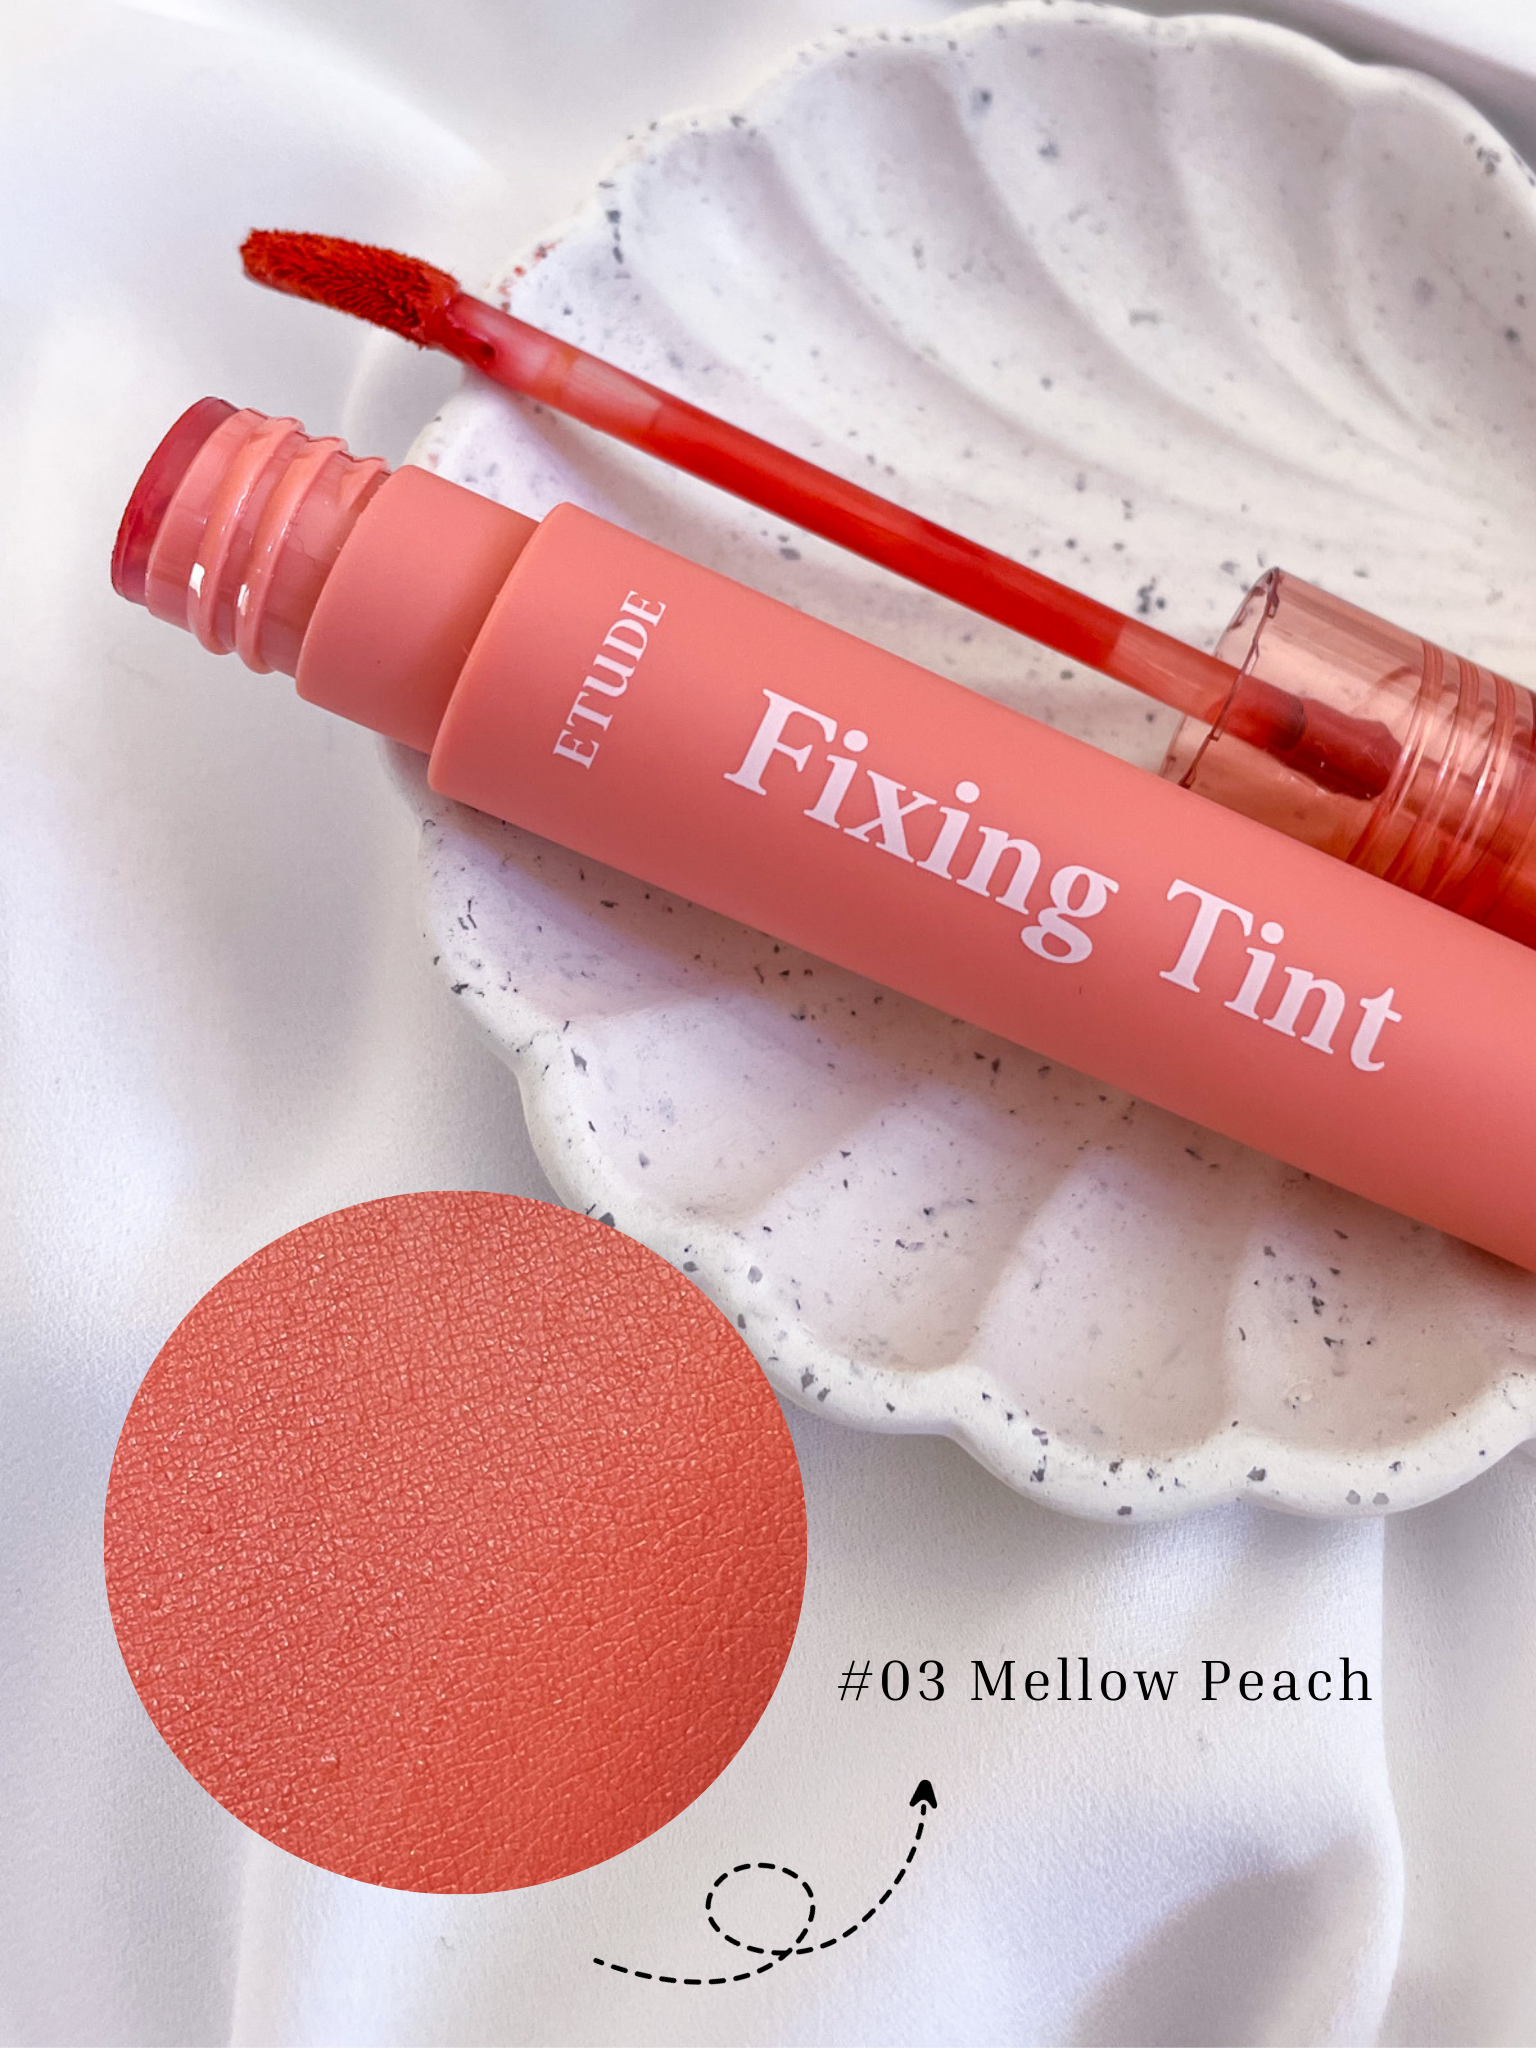 Fixing Tint [#03 Mellow Peach]